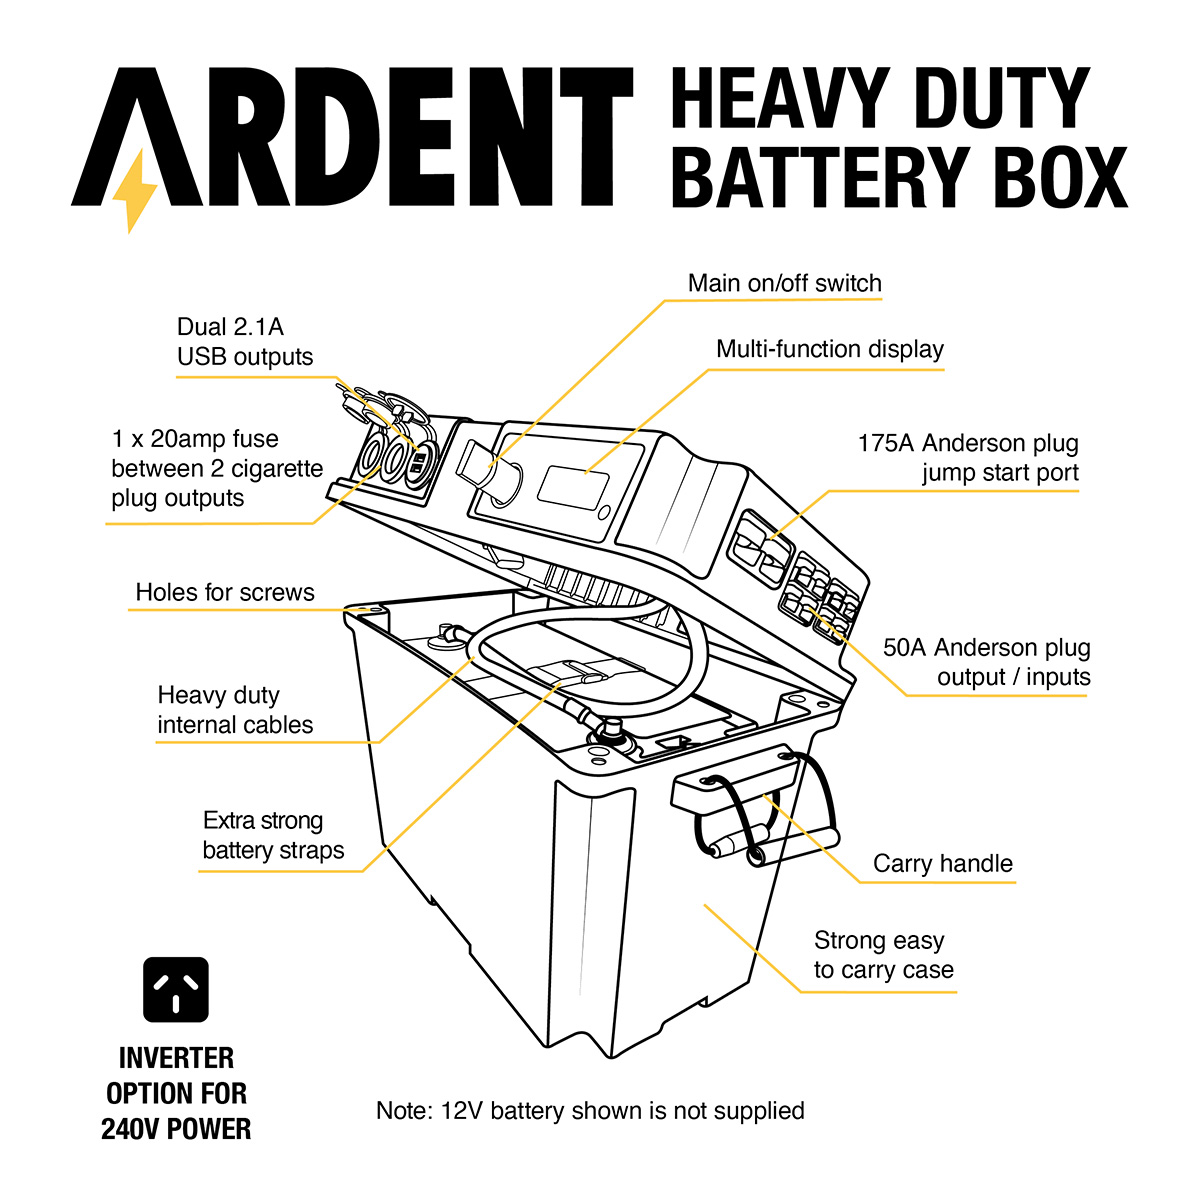 Ardent Battery Box